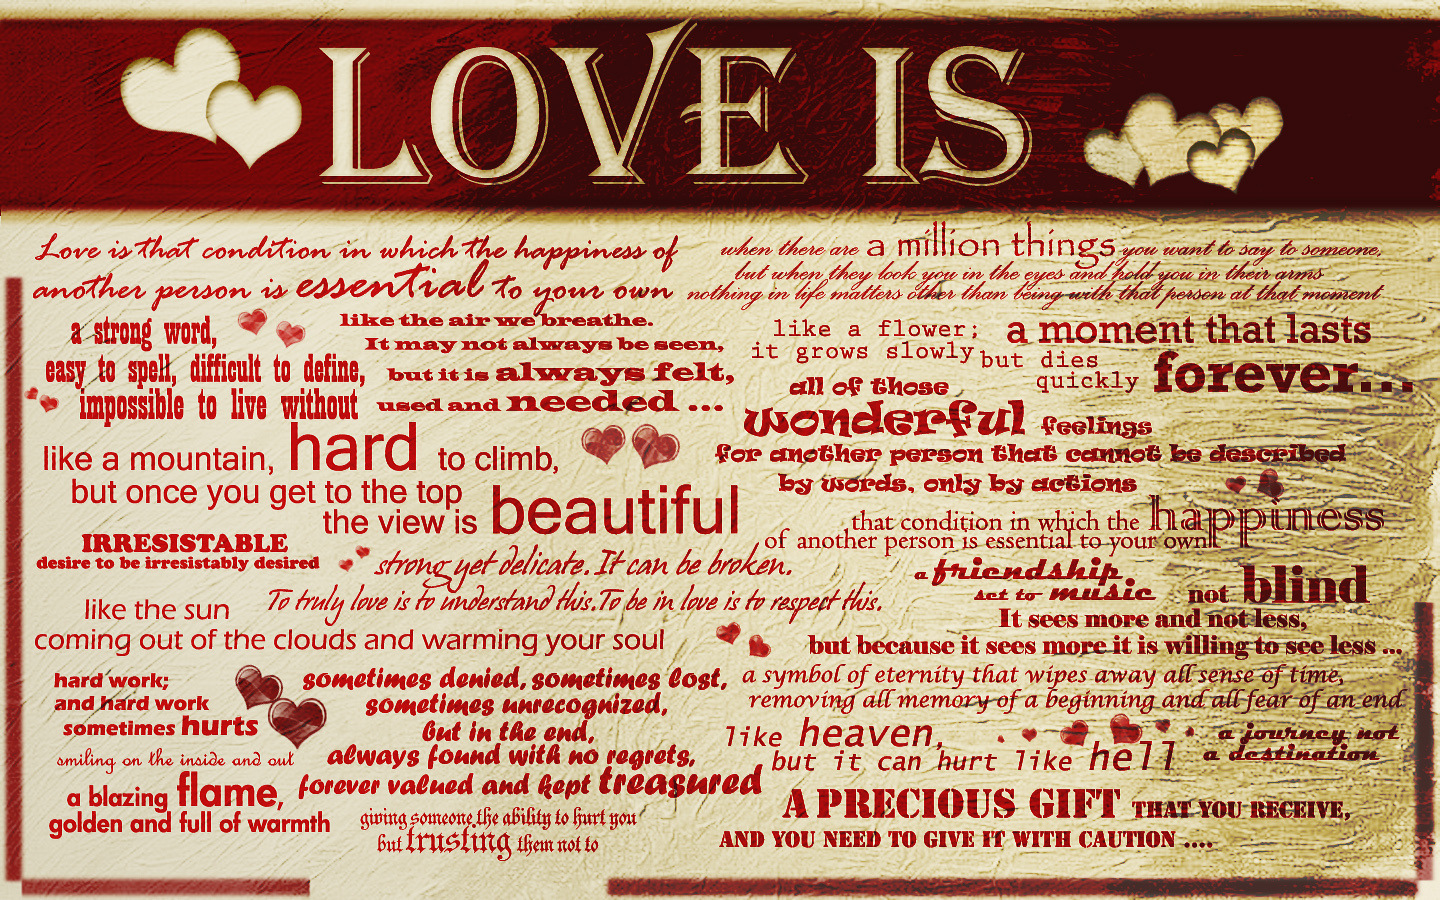 Beautiful Love Words. Английские газеты про любовь картинки. Love is strong. Любовные картинки на турецком языке-. This love words